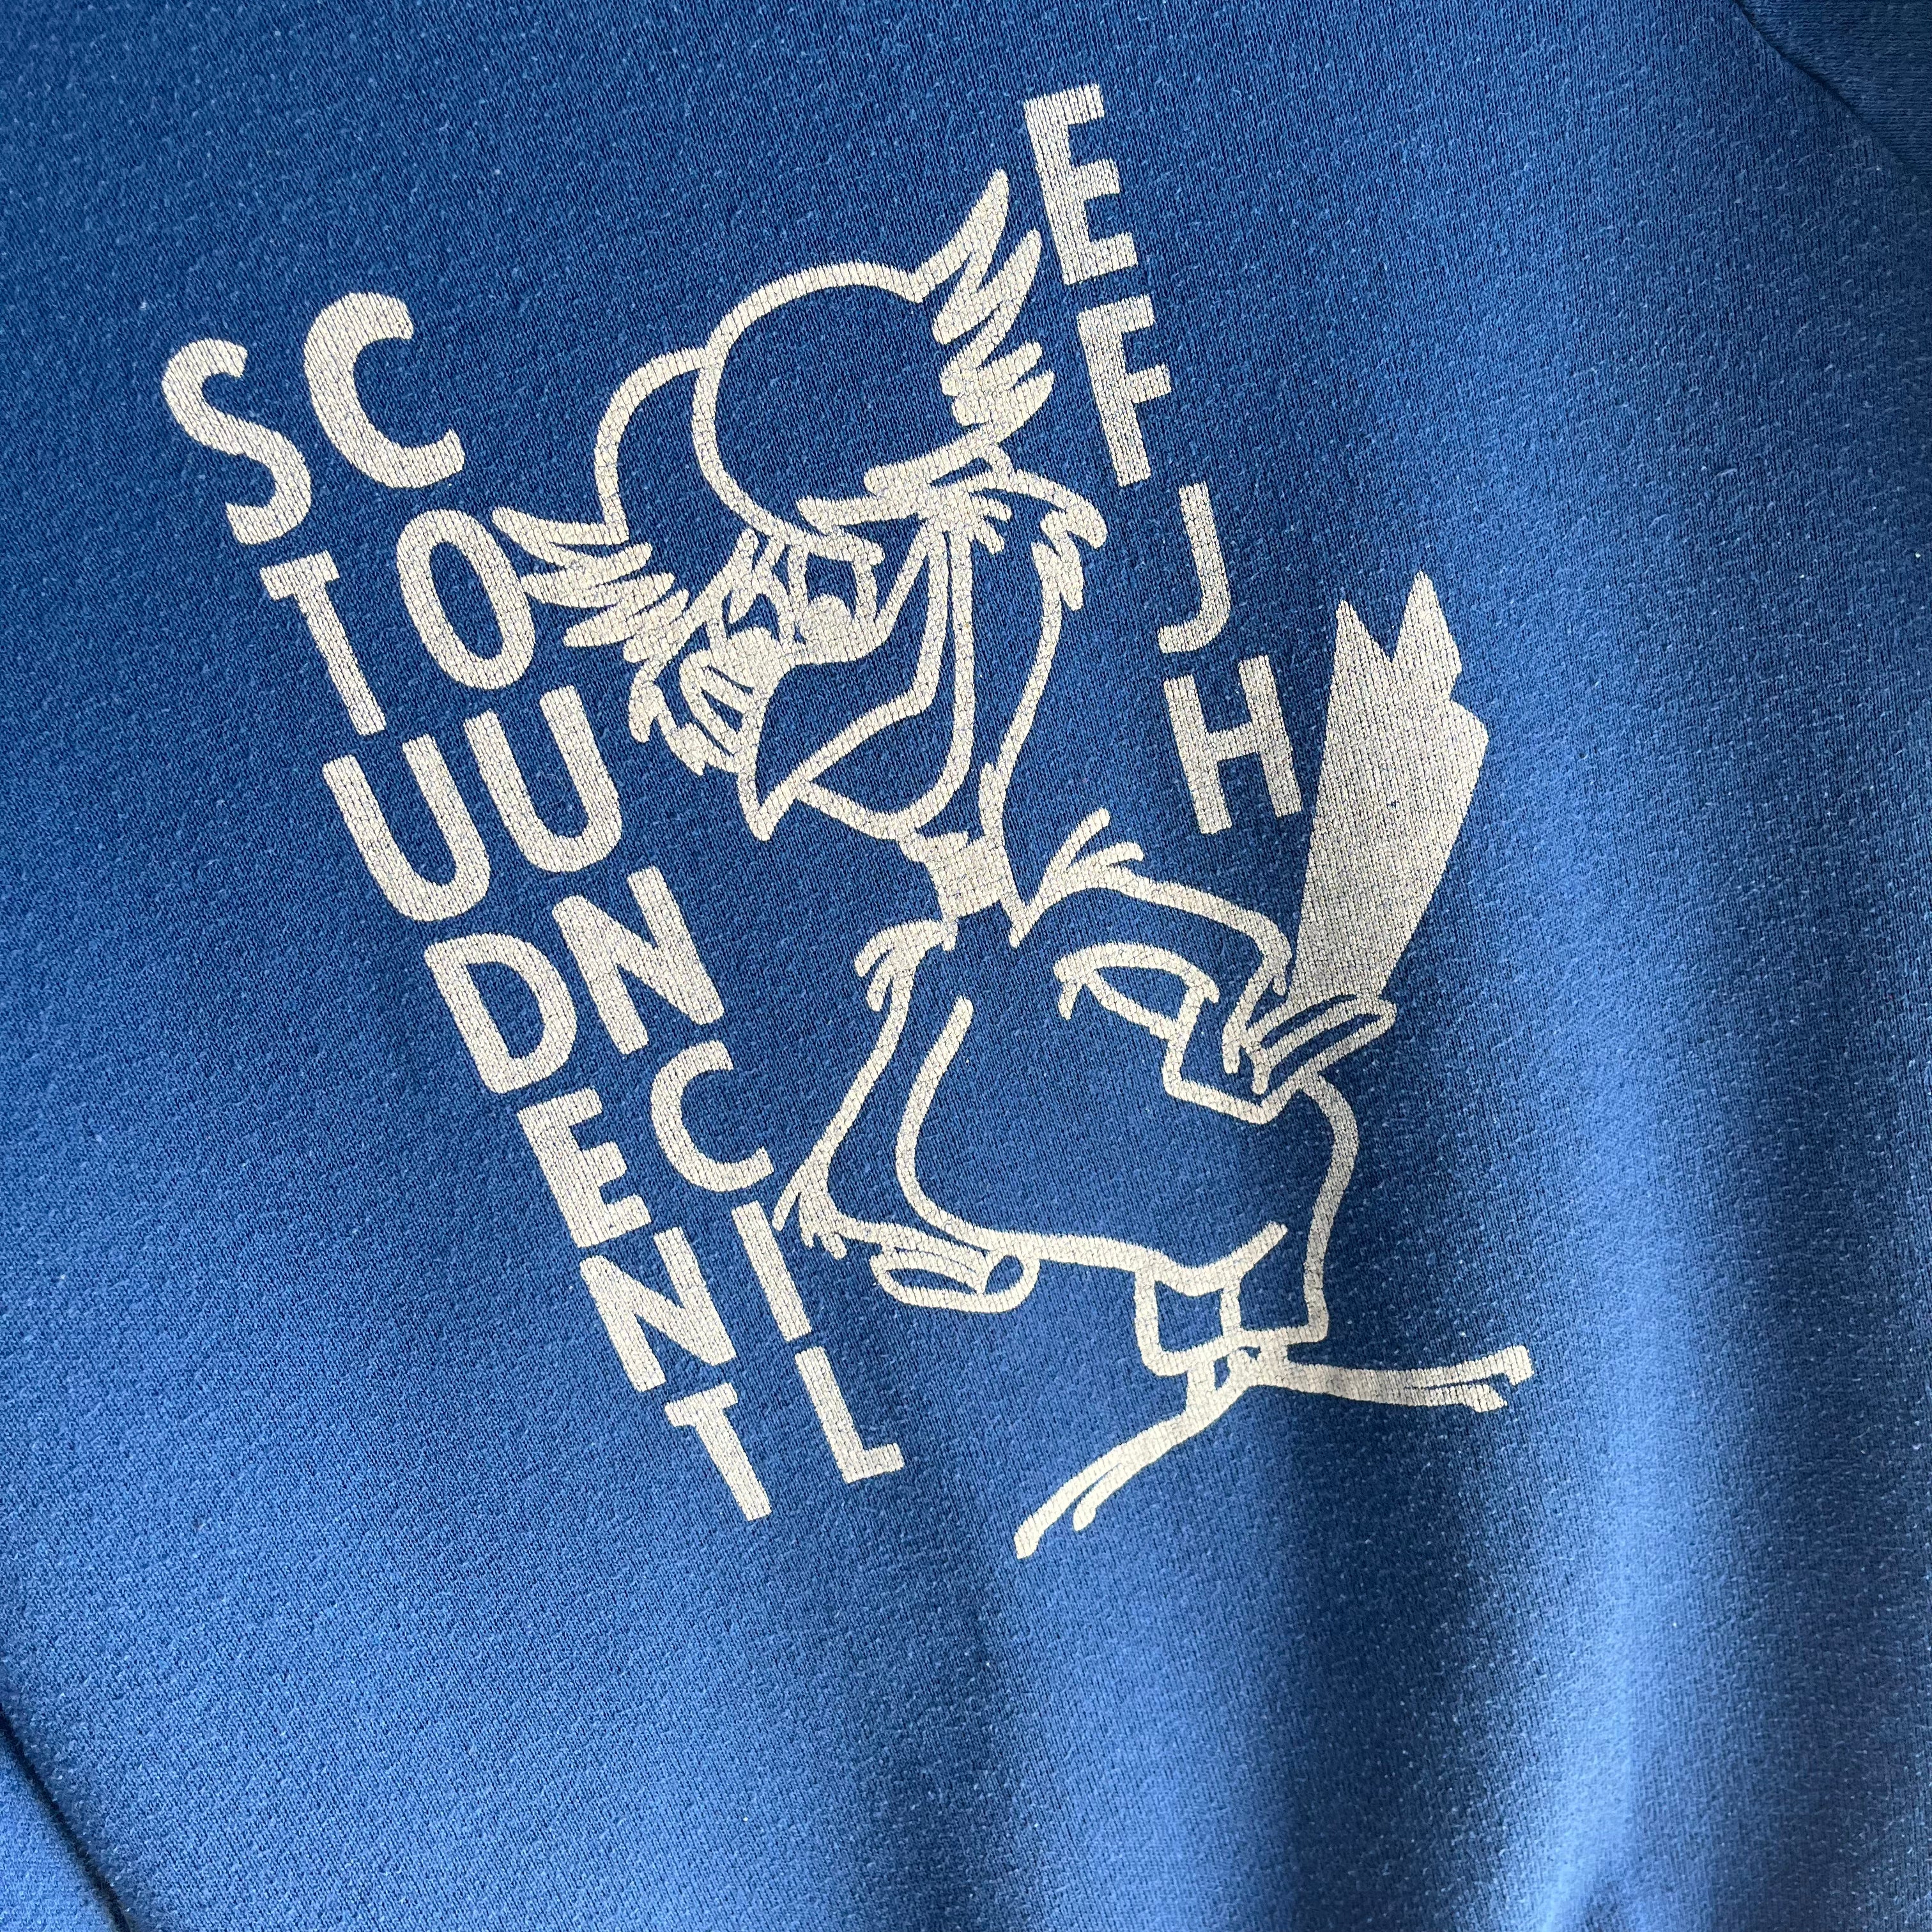 1980s Junior High Student Council Sweatshirt